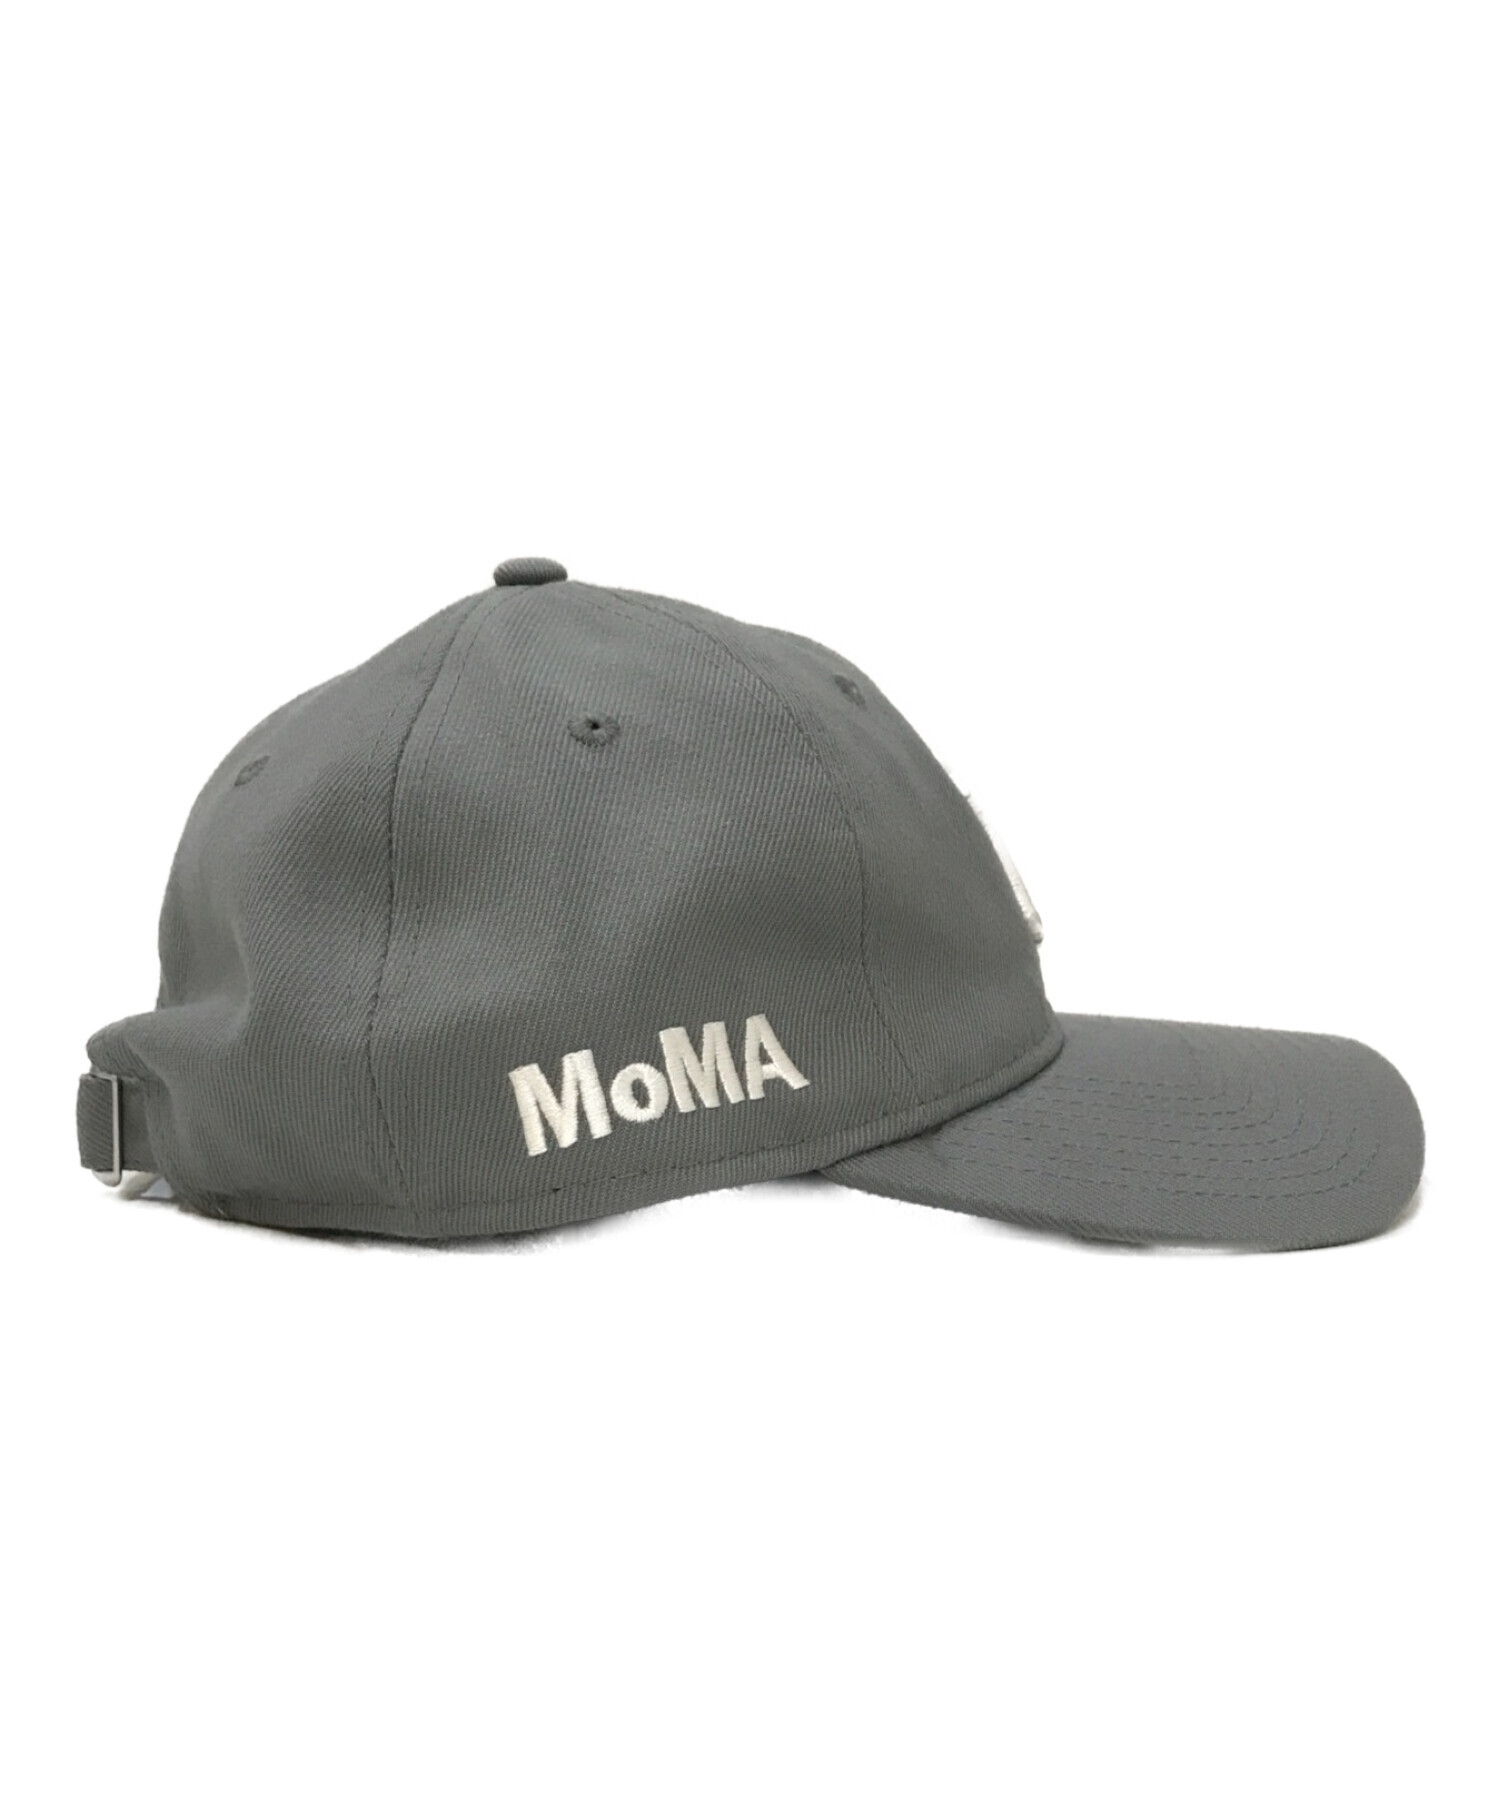 New Era (ニューエラ) MoMA (モマ) ヤンキースキャップ グレー